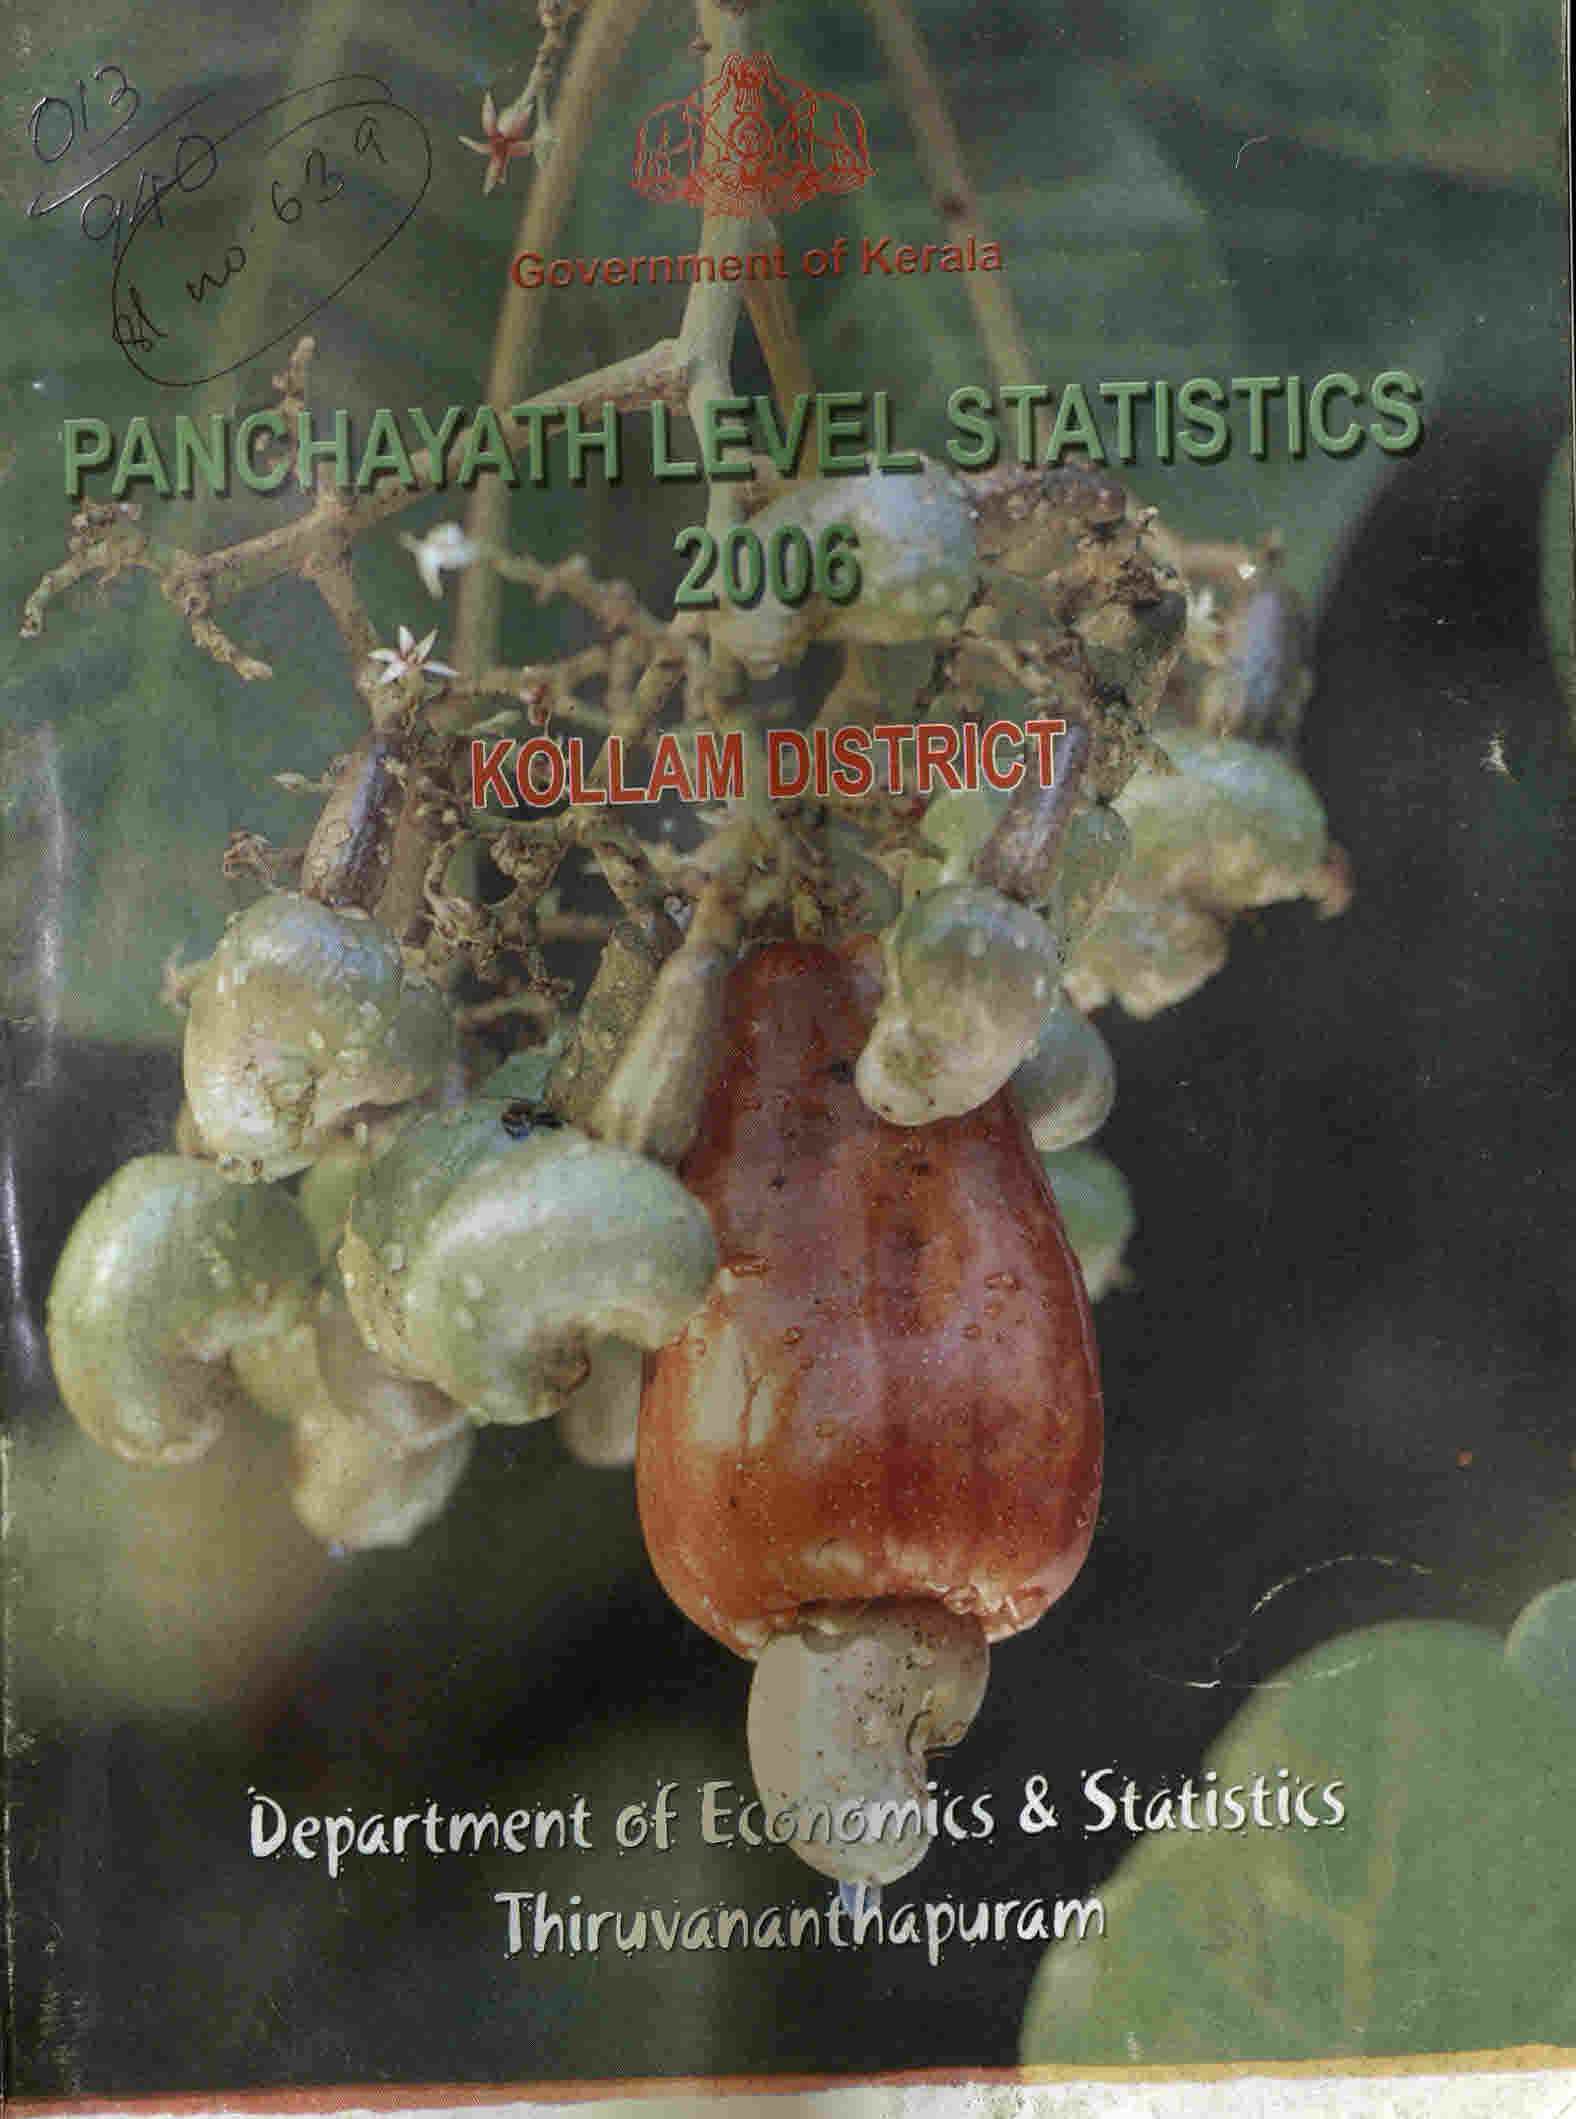 Panchayath Level Statistics Kollam District 2006